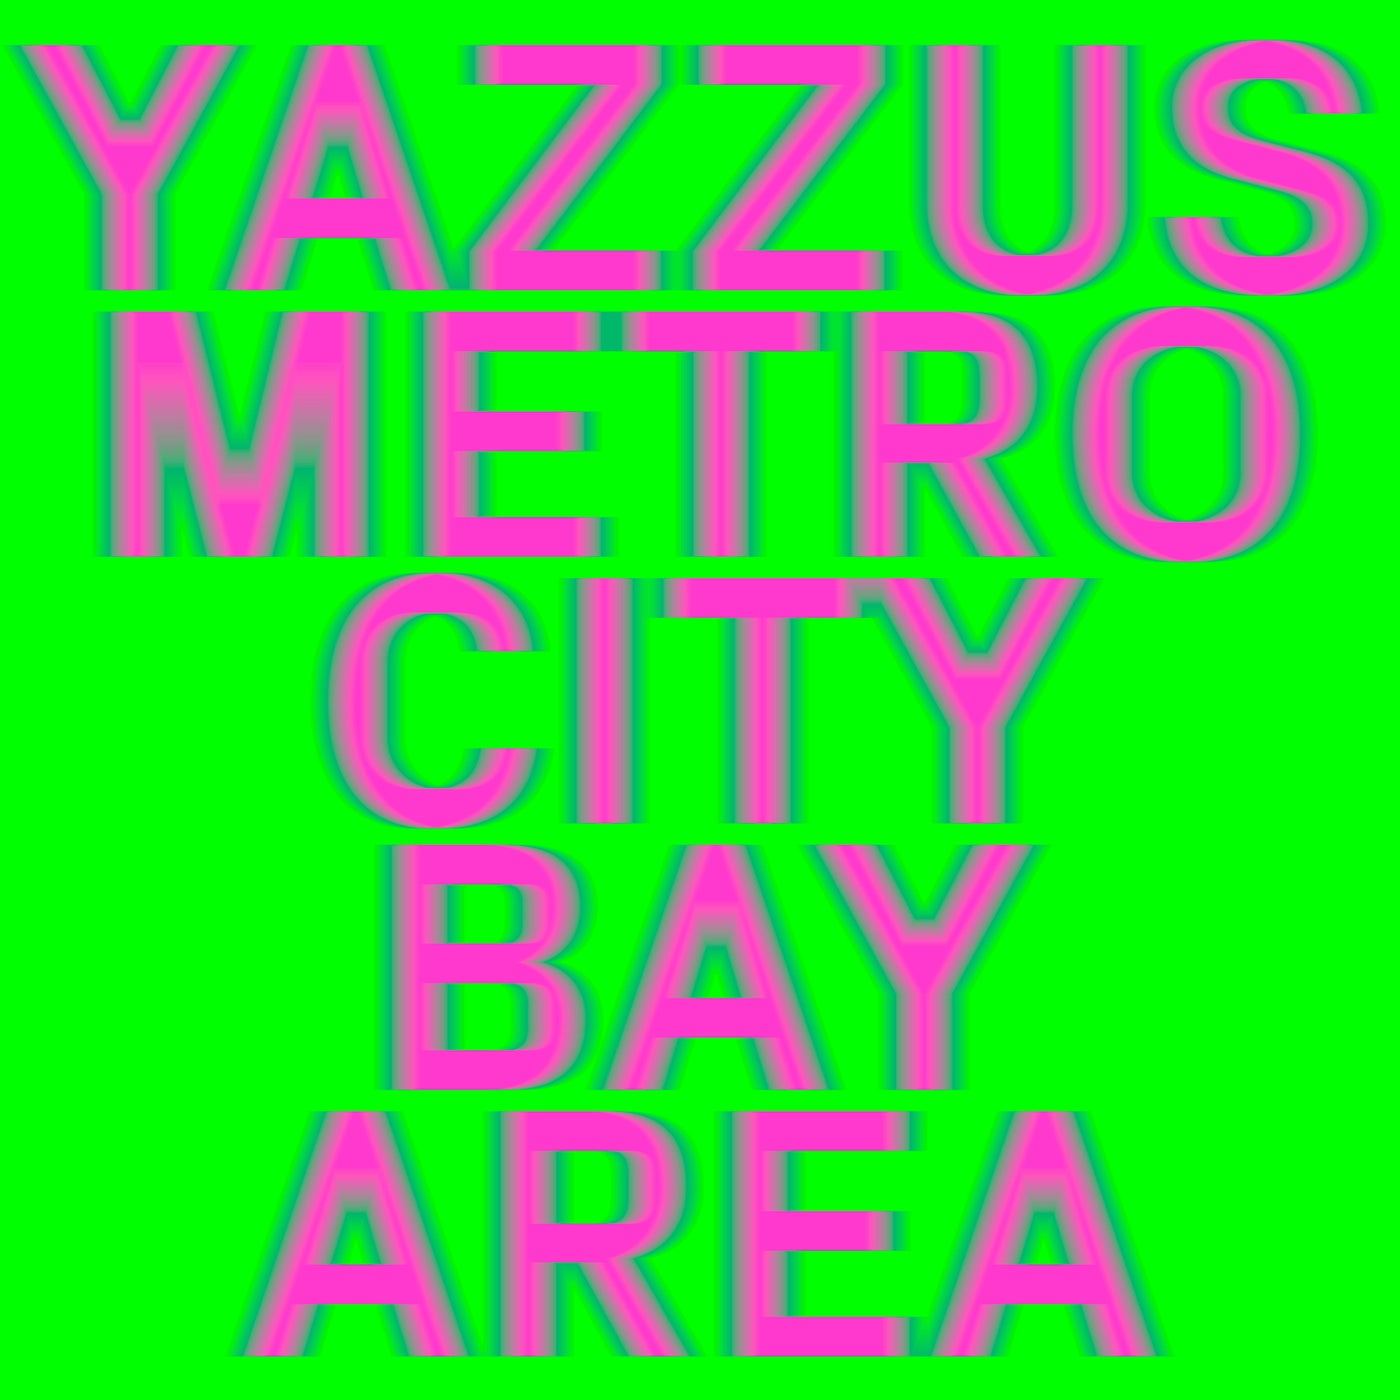 Metro City Bay Area